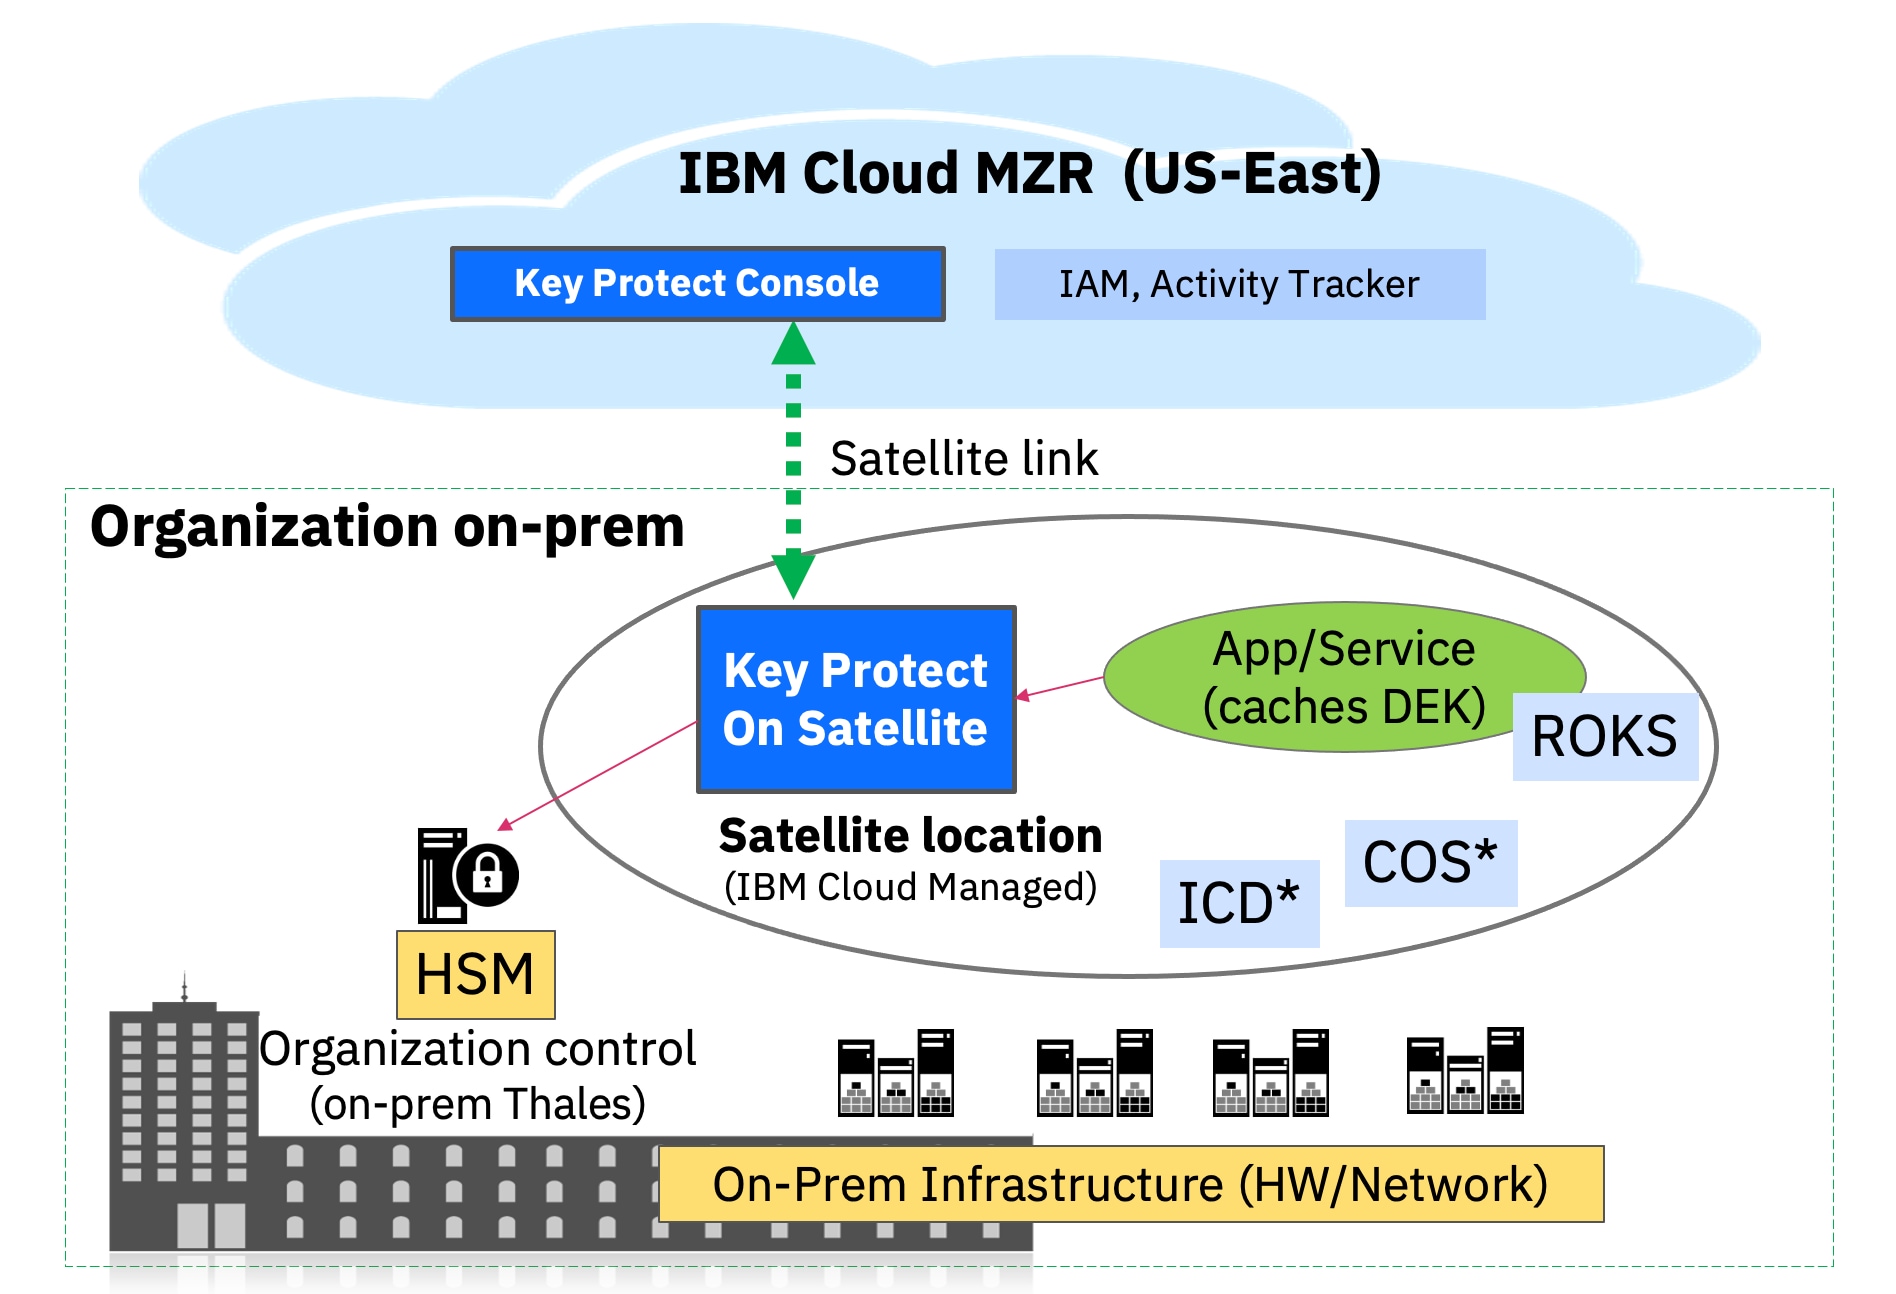 IBM Cross-Platform Cloud Campaign Takes On  Services 11/08/2013